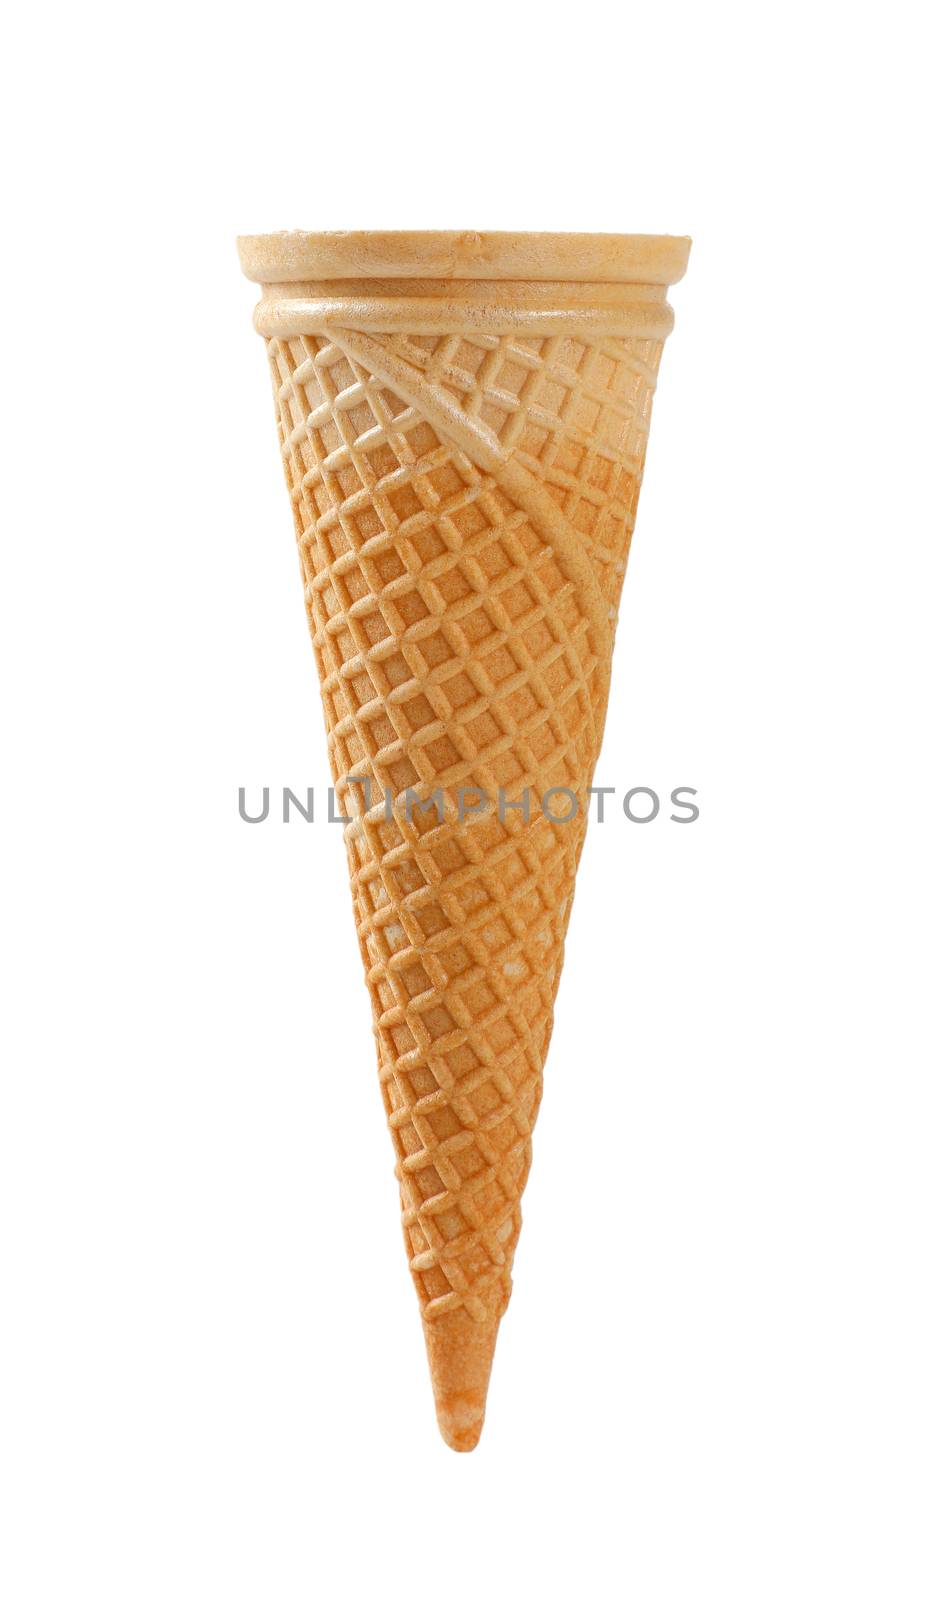 Ice cream cone by Digifoodstock